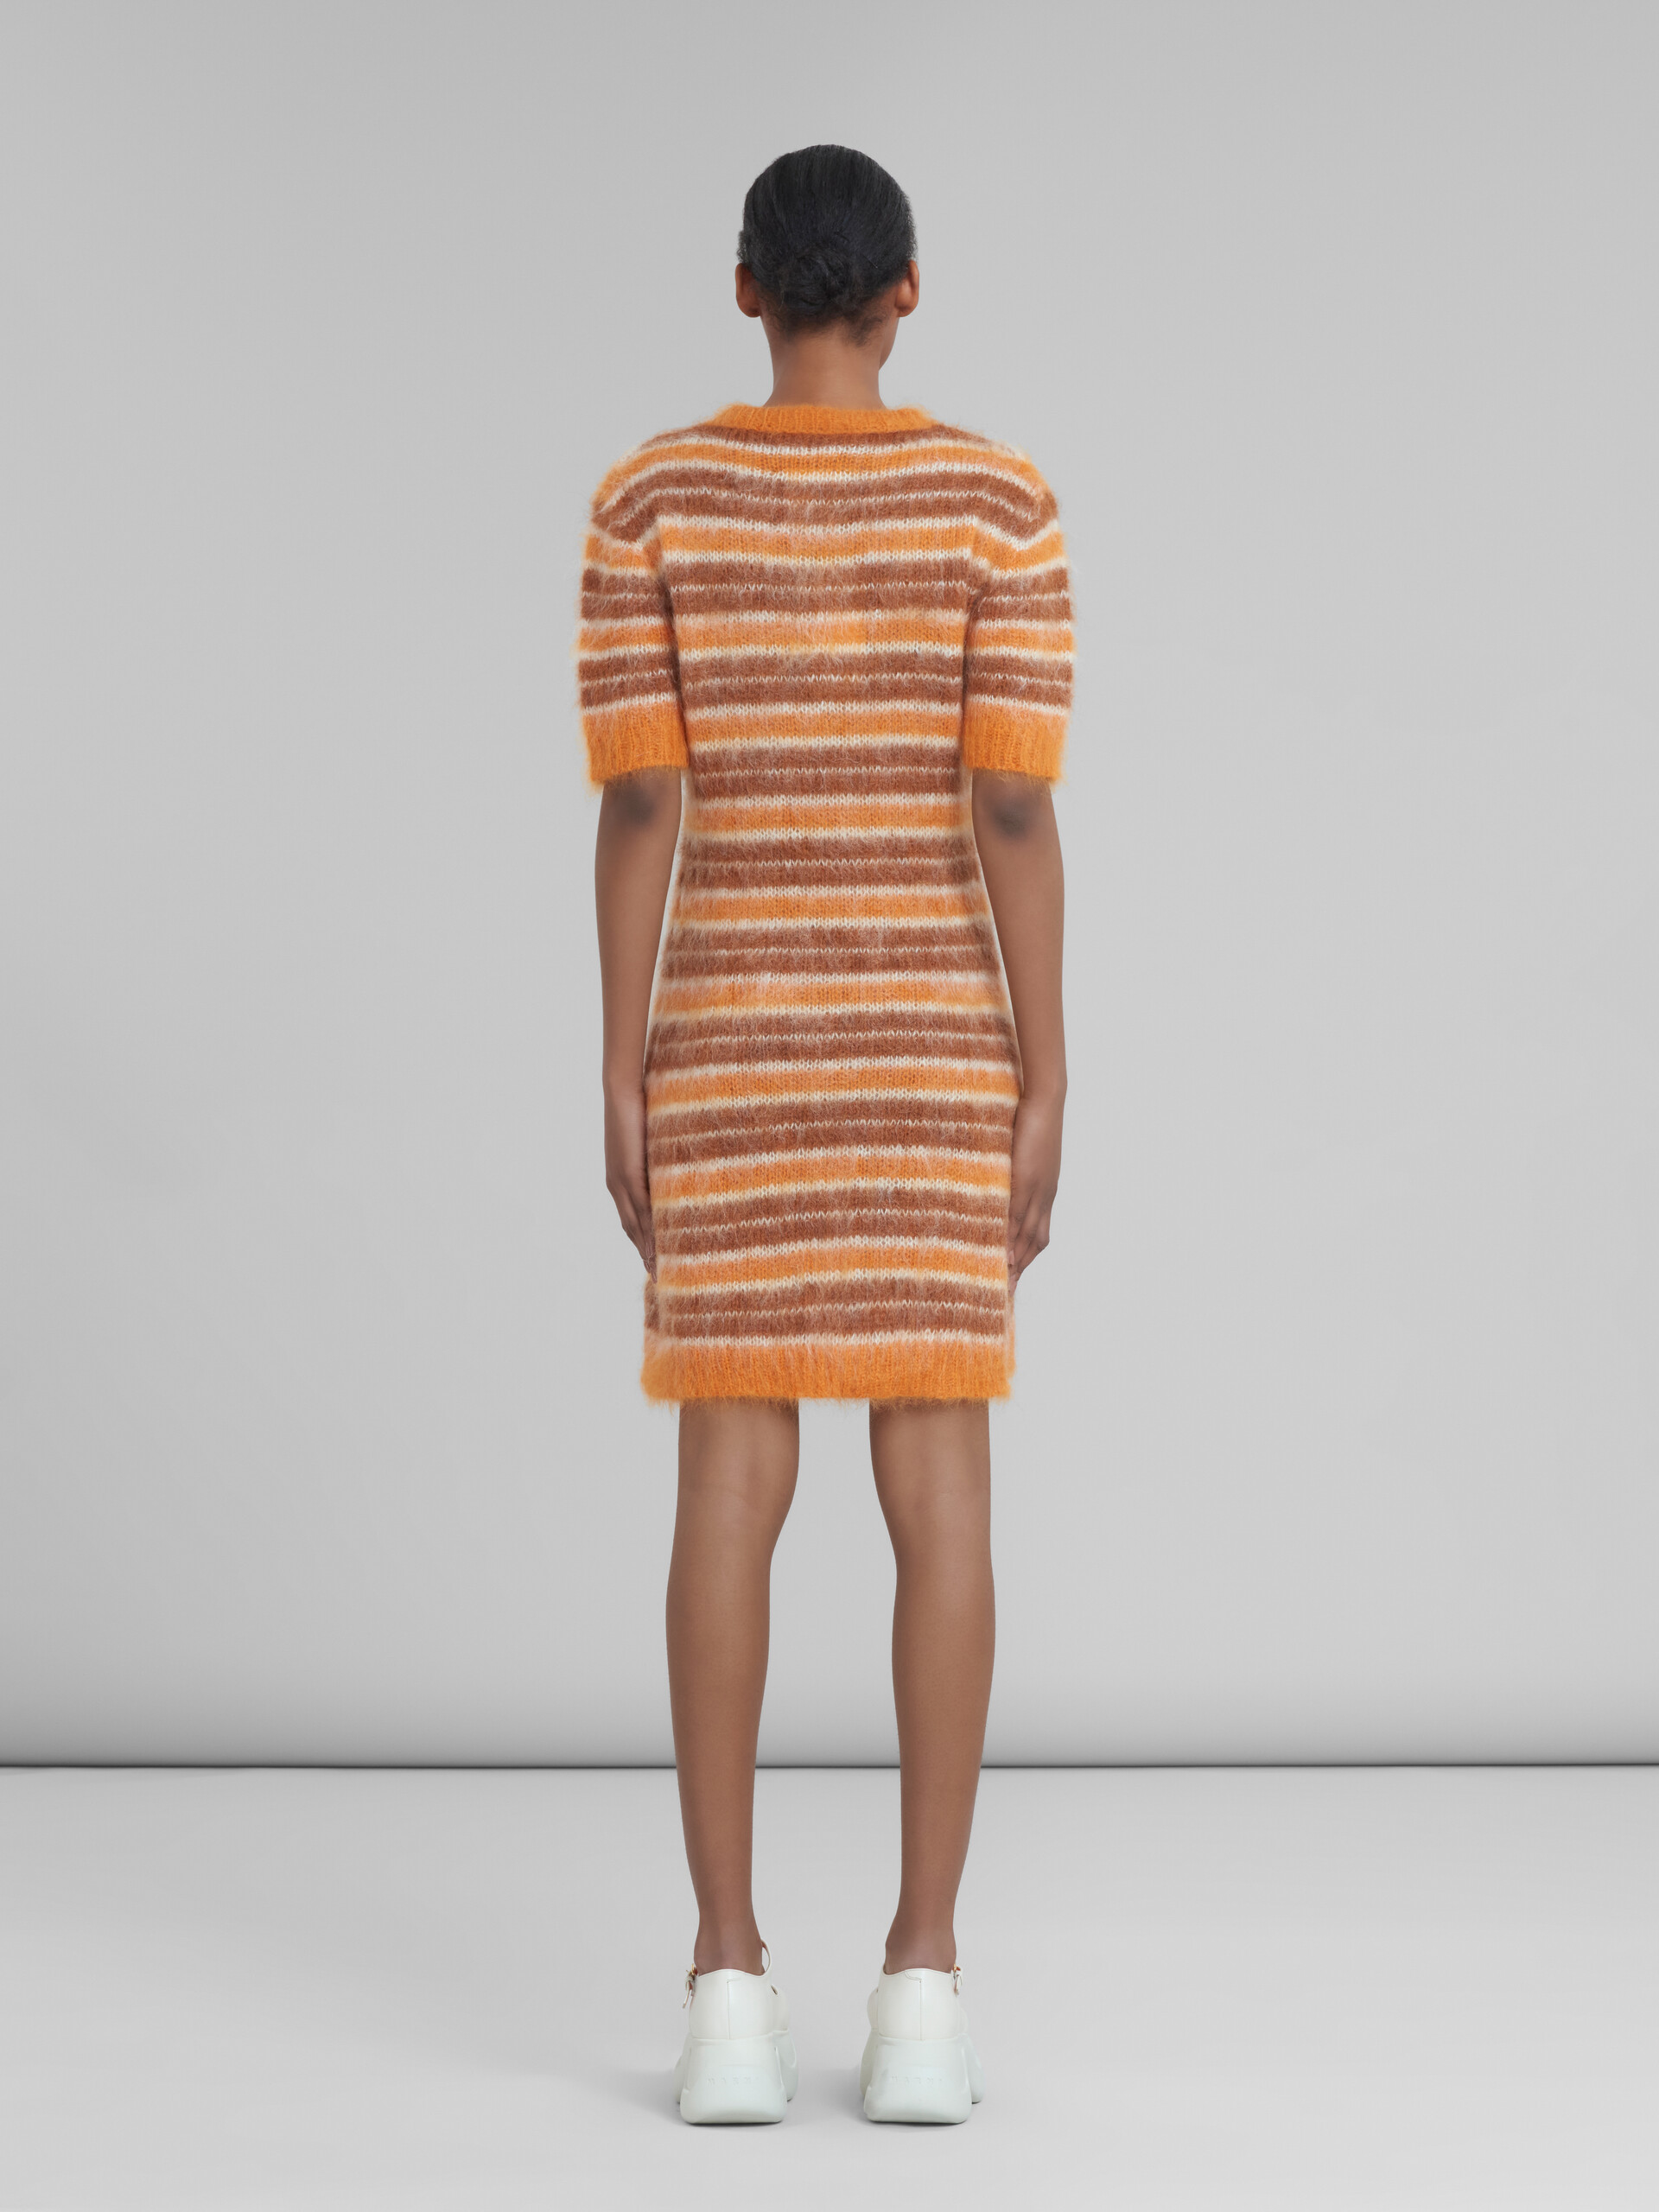 Mohair dress with orange stripes - Dresses - Image 3